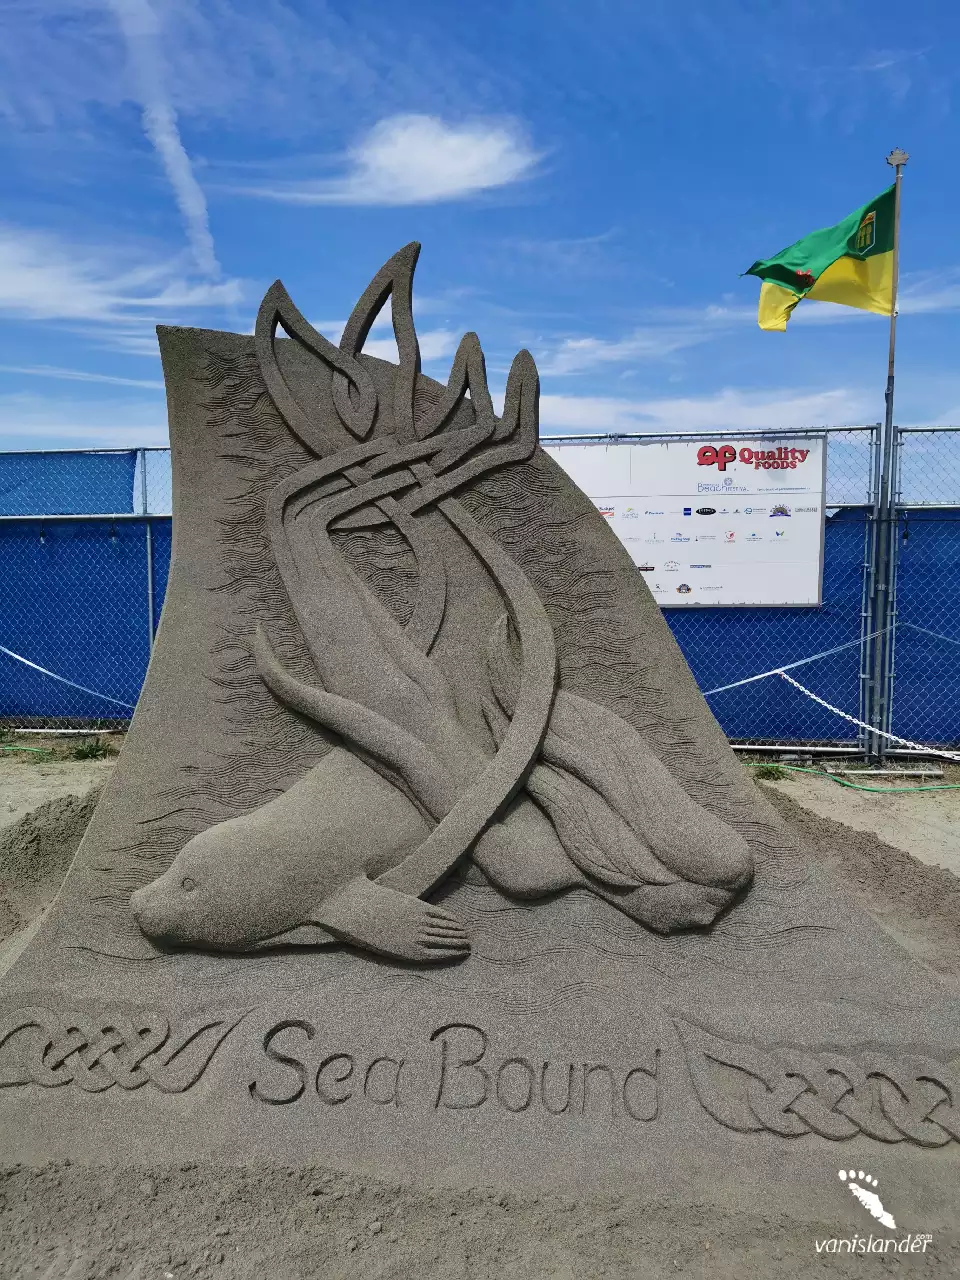 Sea Bound Sand Sculpture - Parksville Festival, Vancouver Island